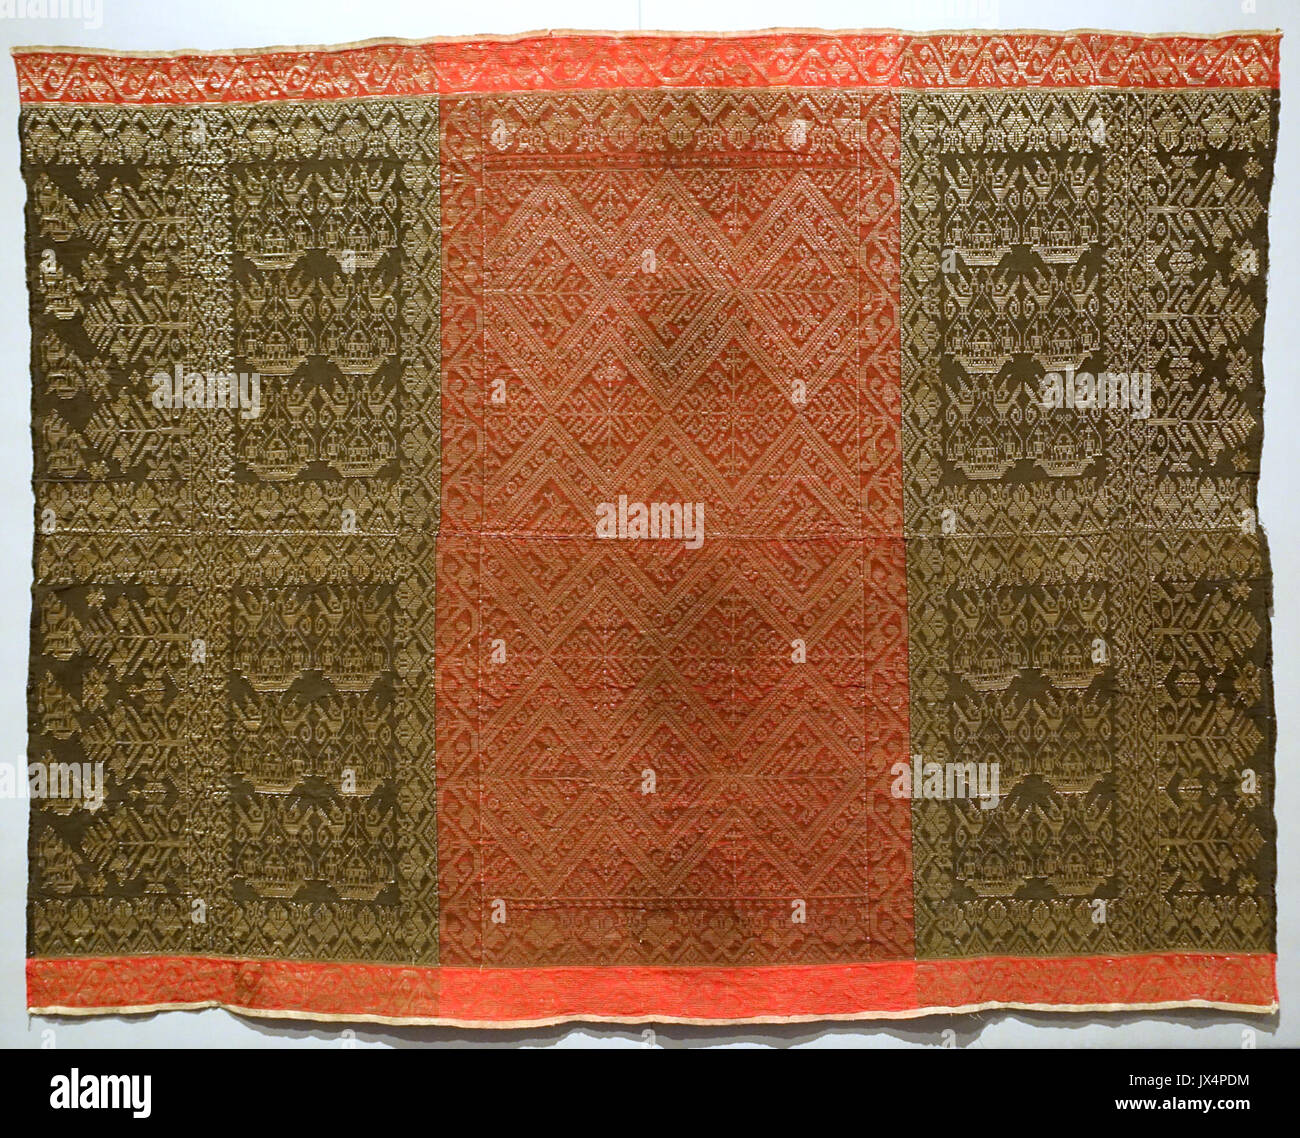 Kre alang (skirt), Indonesia, Sumbawa, Semawa people, early 20th century, cotton, metal wrapped silk   Textile Museum, George Washington University   DSC09773 Stock Photo